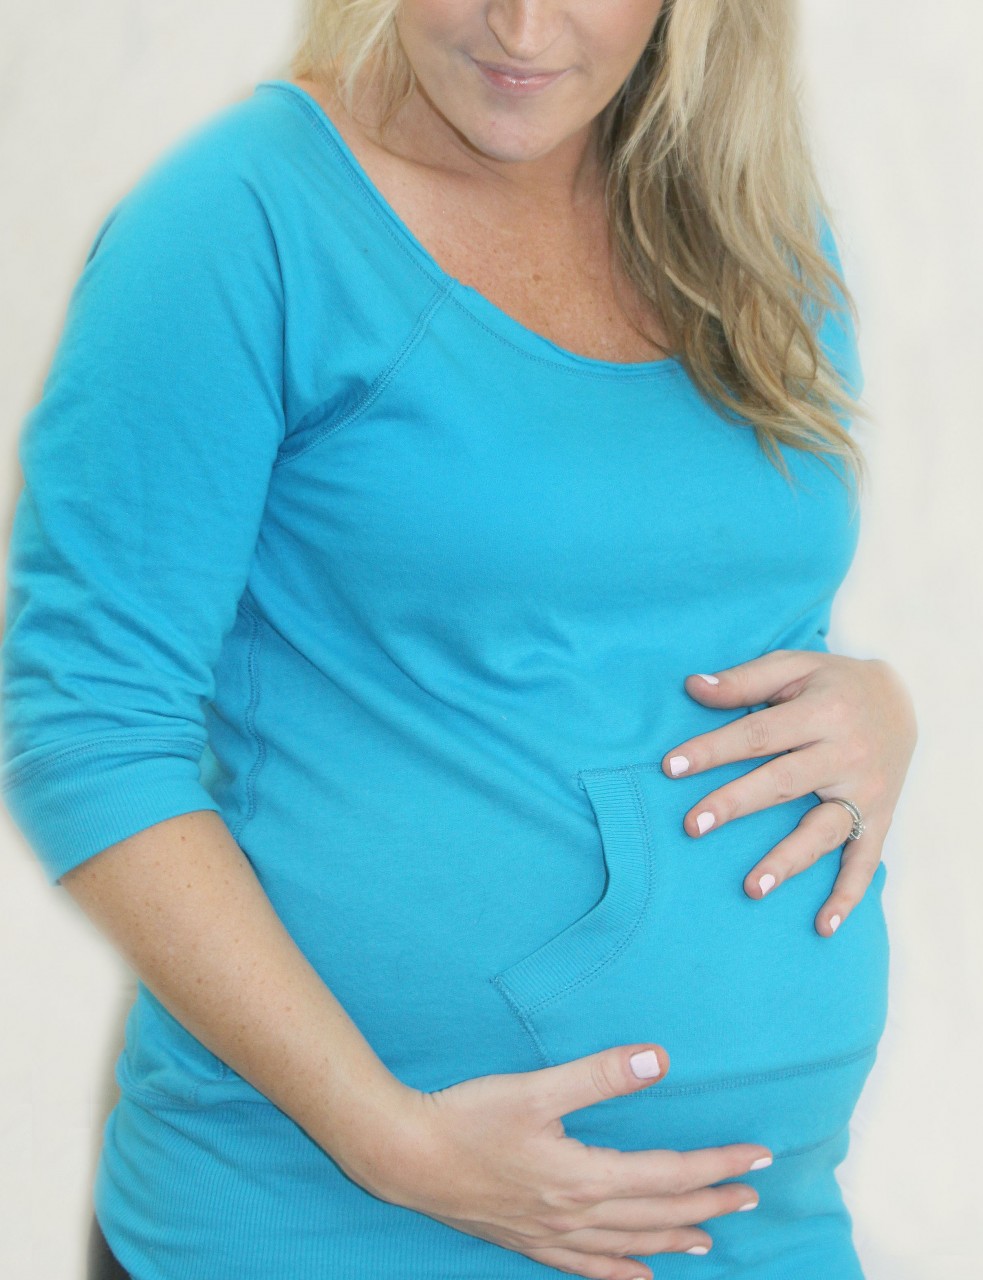 PREGNANCY DISCRIMINATION INFORMATION